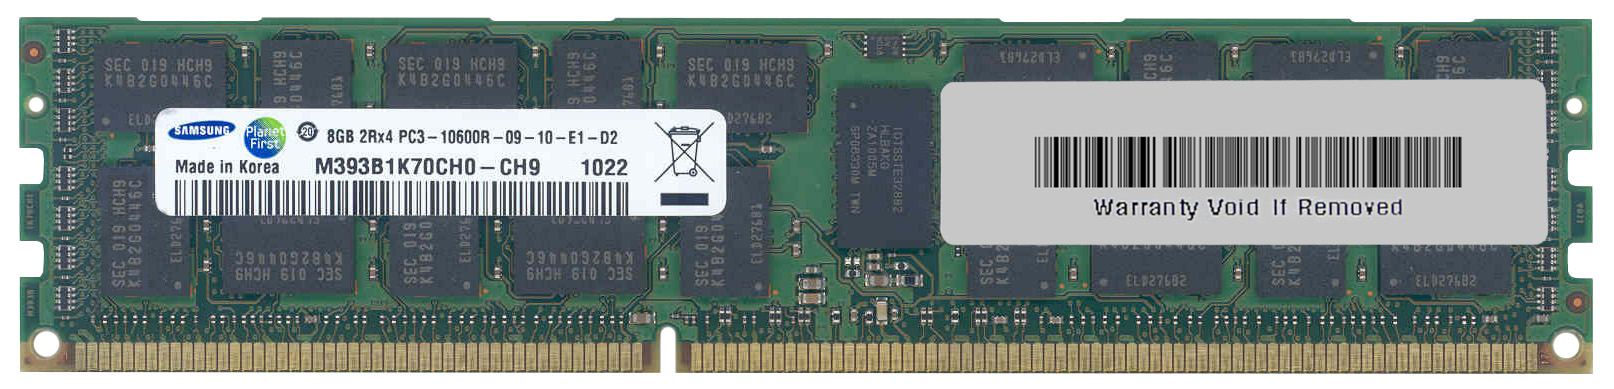 3DHPWW566AV 3D Memory 32GB Kit (4 X 8GB) PC3-10600 DDR3-1333MHz ECC Registered CL9 240-Pin DIMM Dual Rank Memory P/N (compatible with WW566AV, KTD-PE313K4/32G, KTH-PL313K4/32G, WD958AV, 500662R-B21)